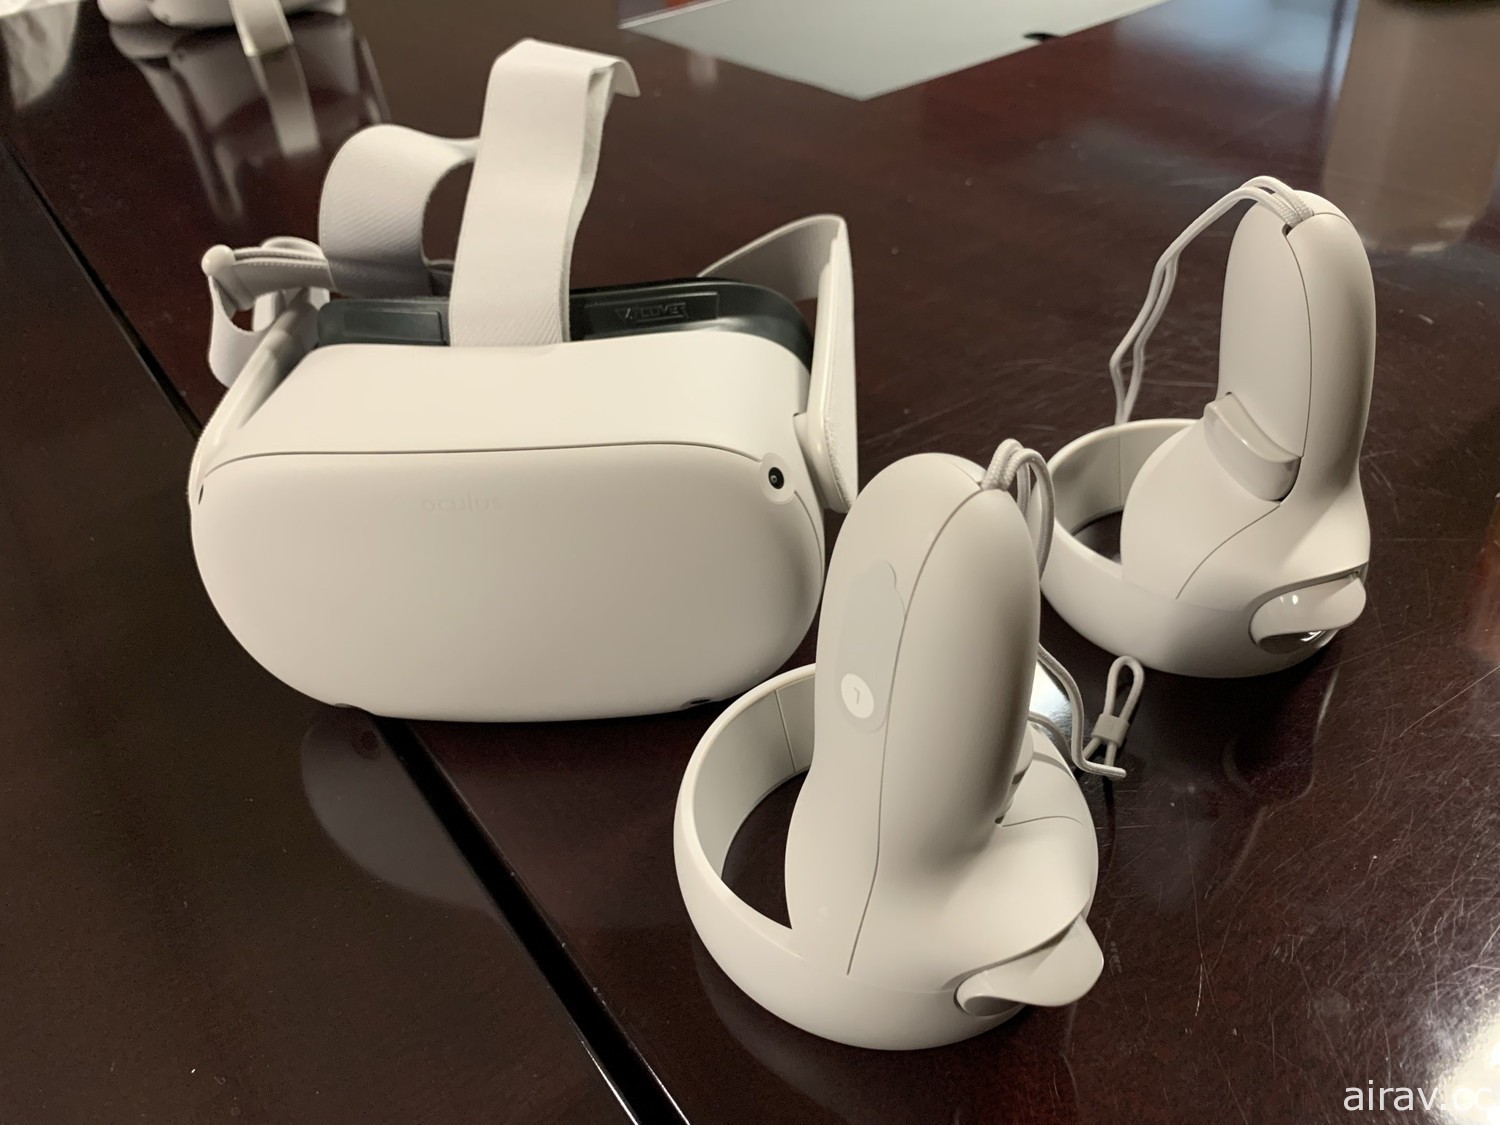 《You Generation》關聯應用程式《VR Live》今日推出 以更親近的距離與偶像互動